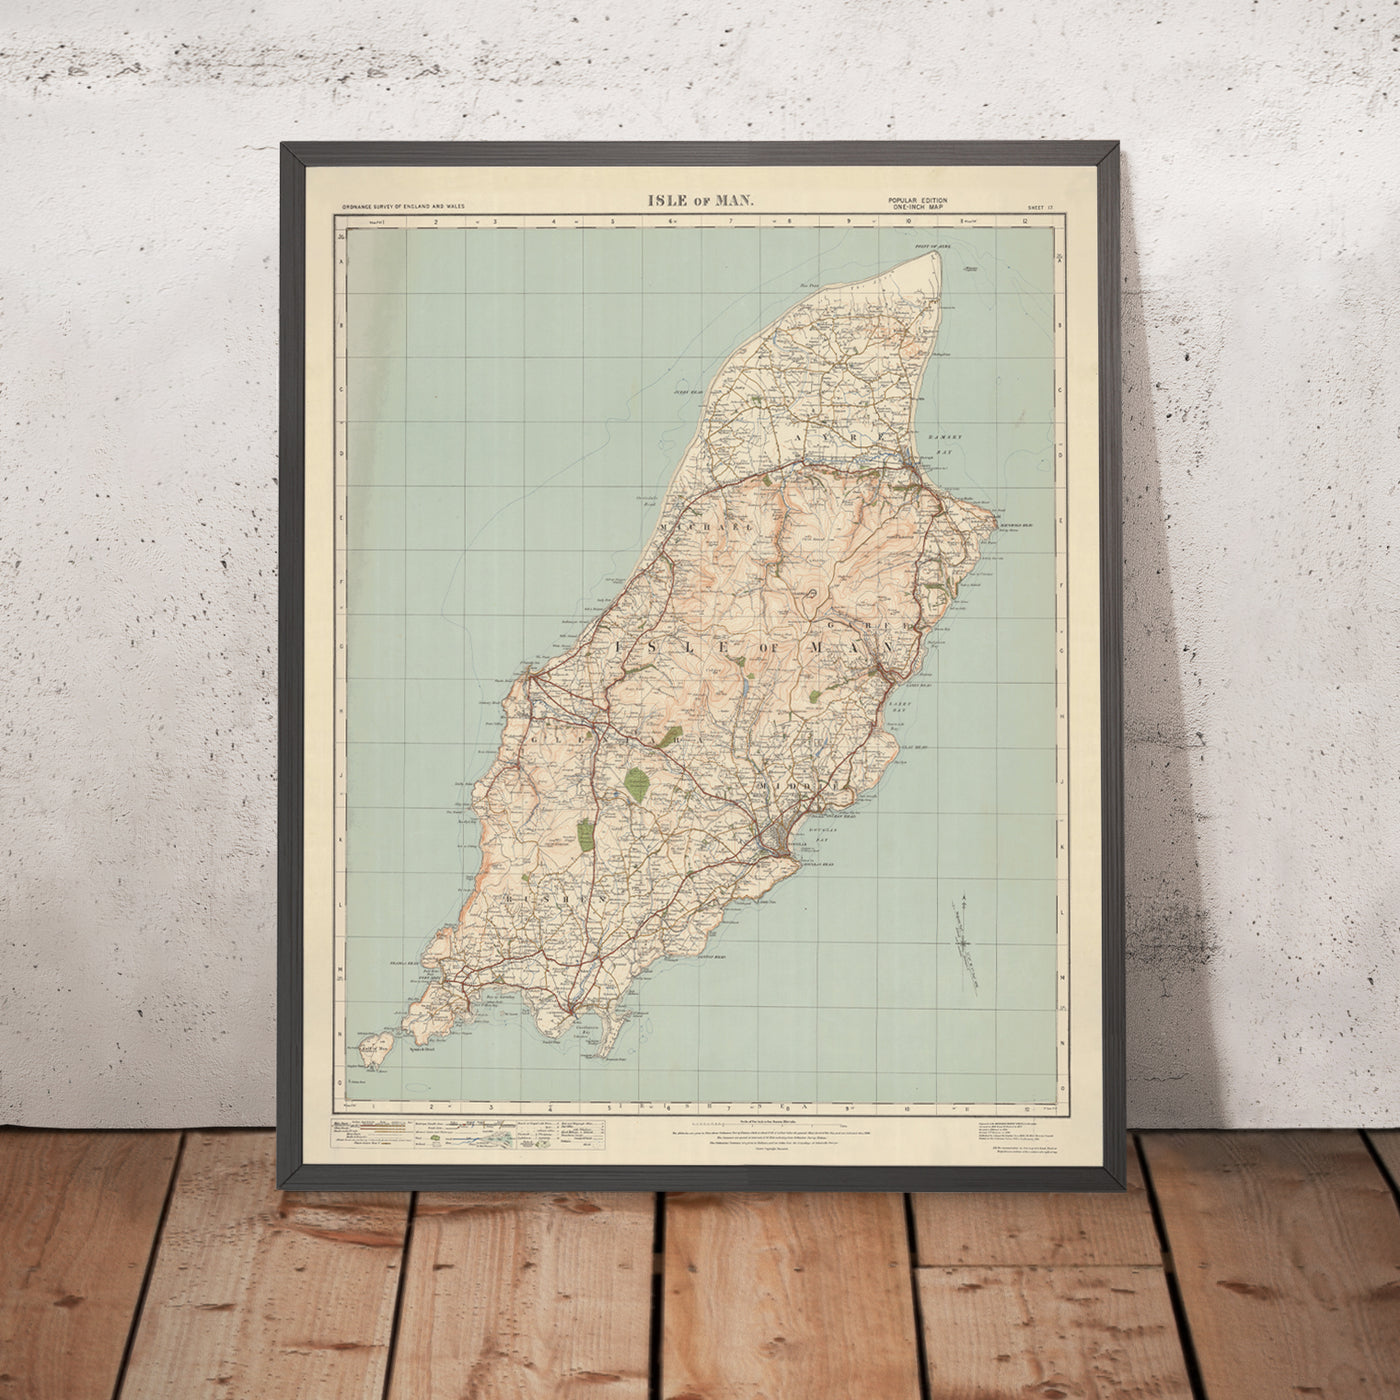 Old Ordnance Survey Map, Sheet 17 - Isle of Man, 1925: Douglas, Peel, Castletown, Ramsey, Port Erin